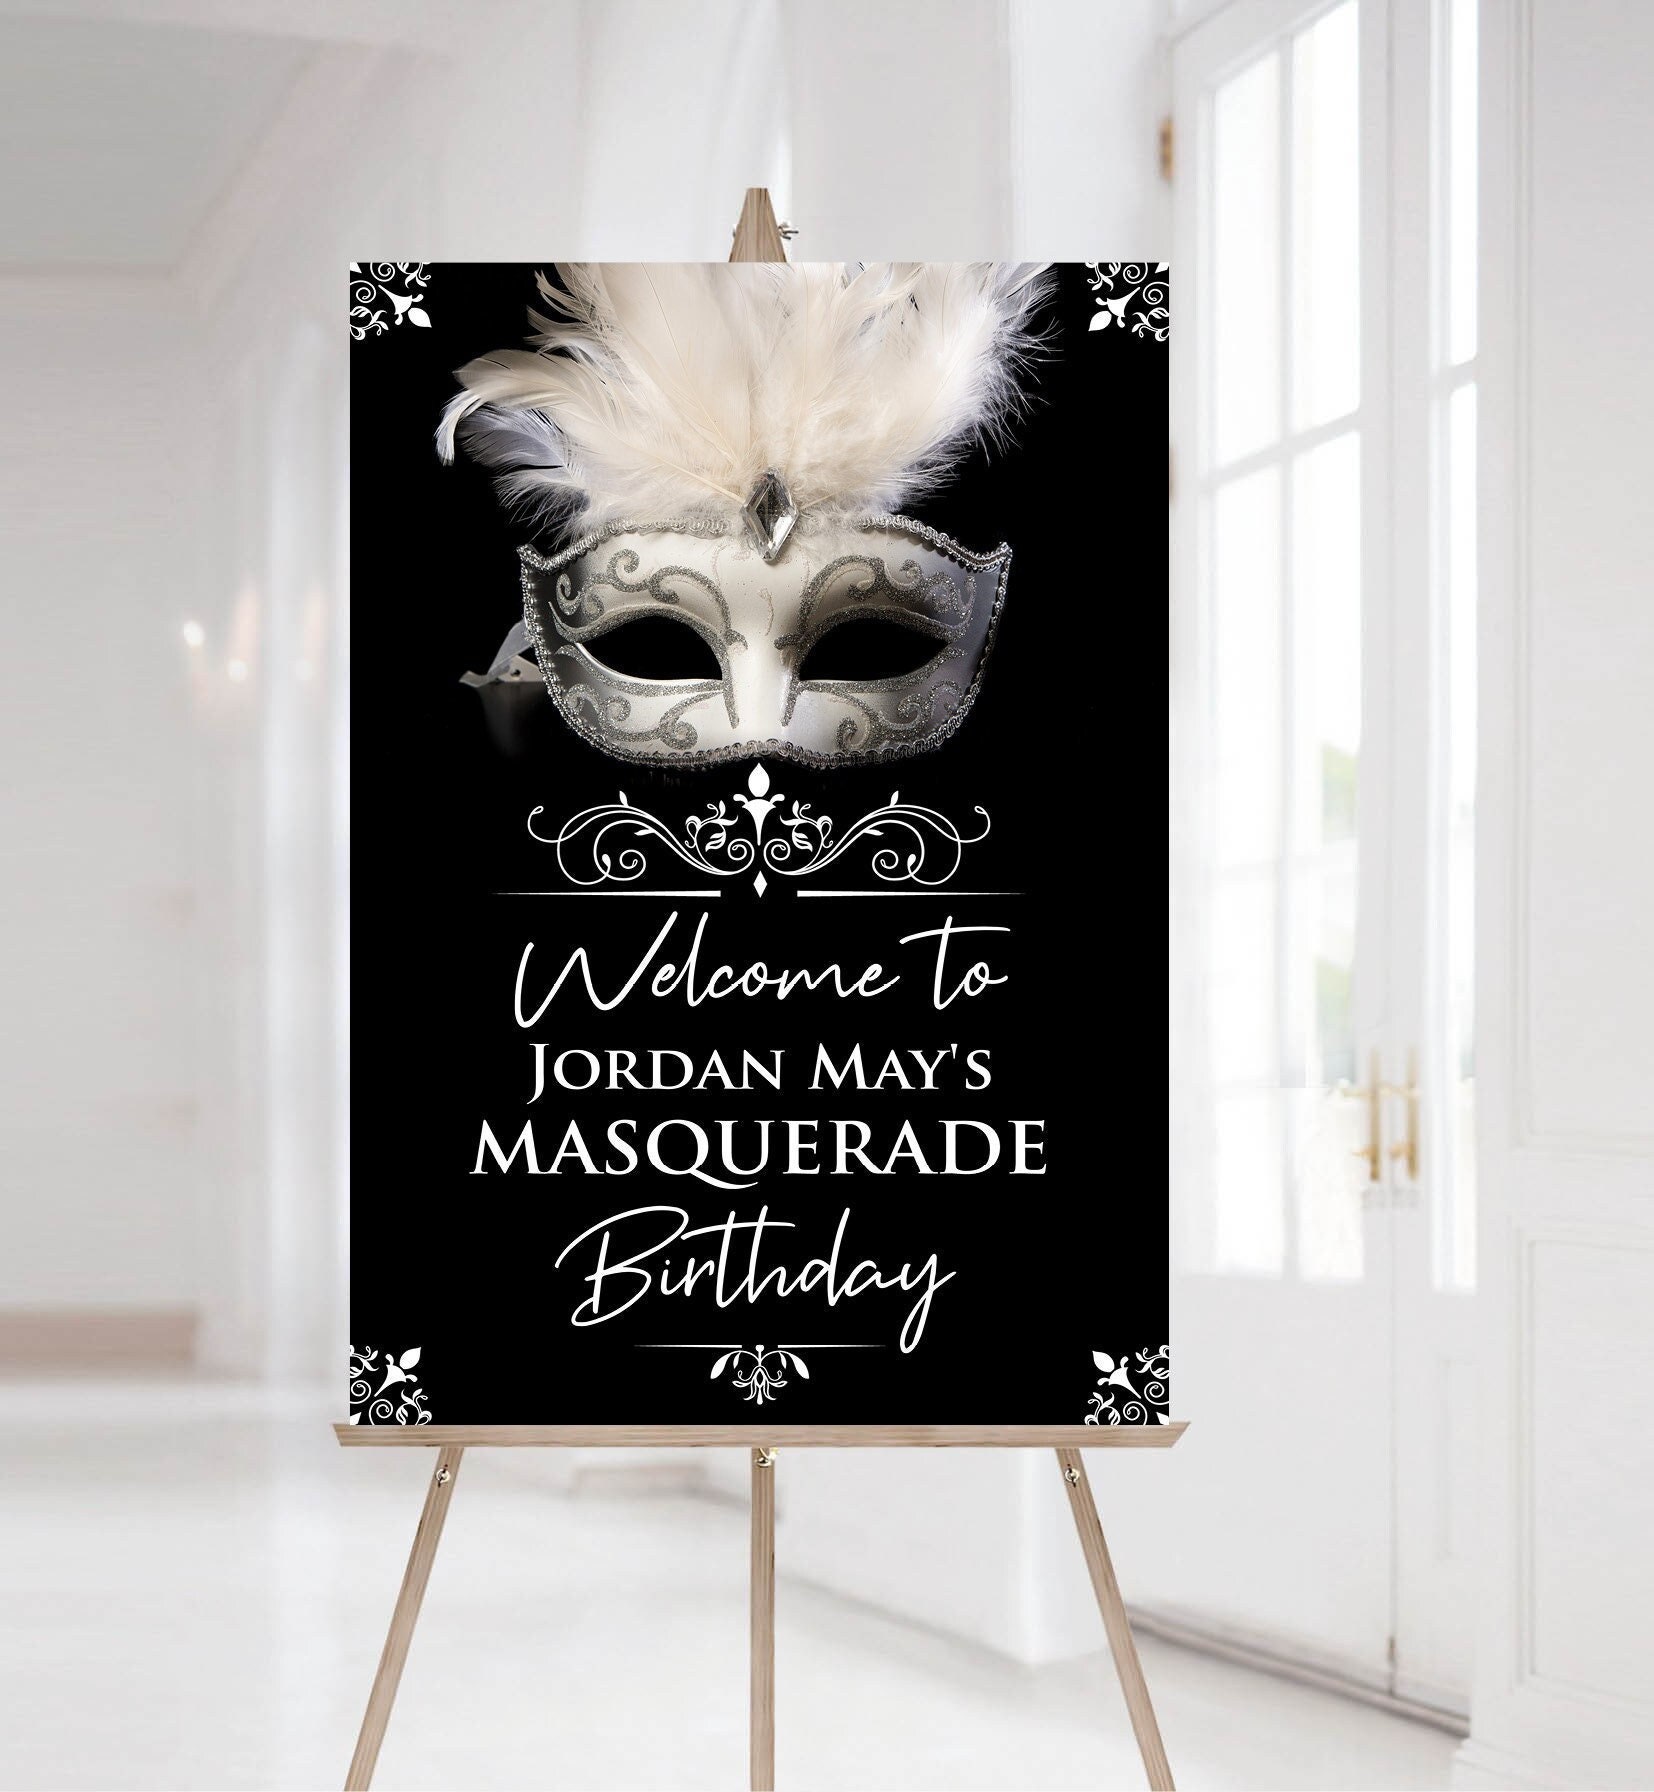 Masquerade Signs, Masquerade Party Decorations, Sweet 16 Masquerade Signs  Set, Masquerade Party Welcome Sign, Masquerade Theme Party Digital 